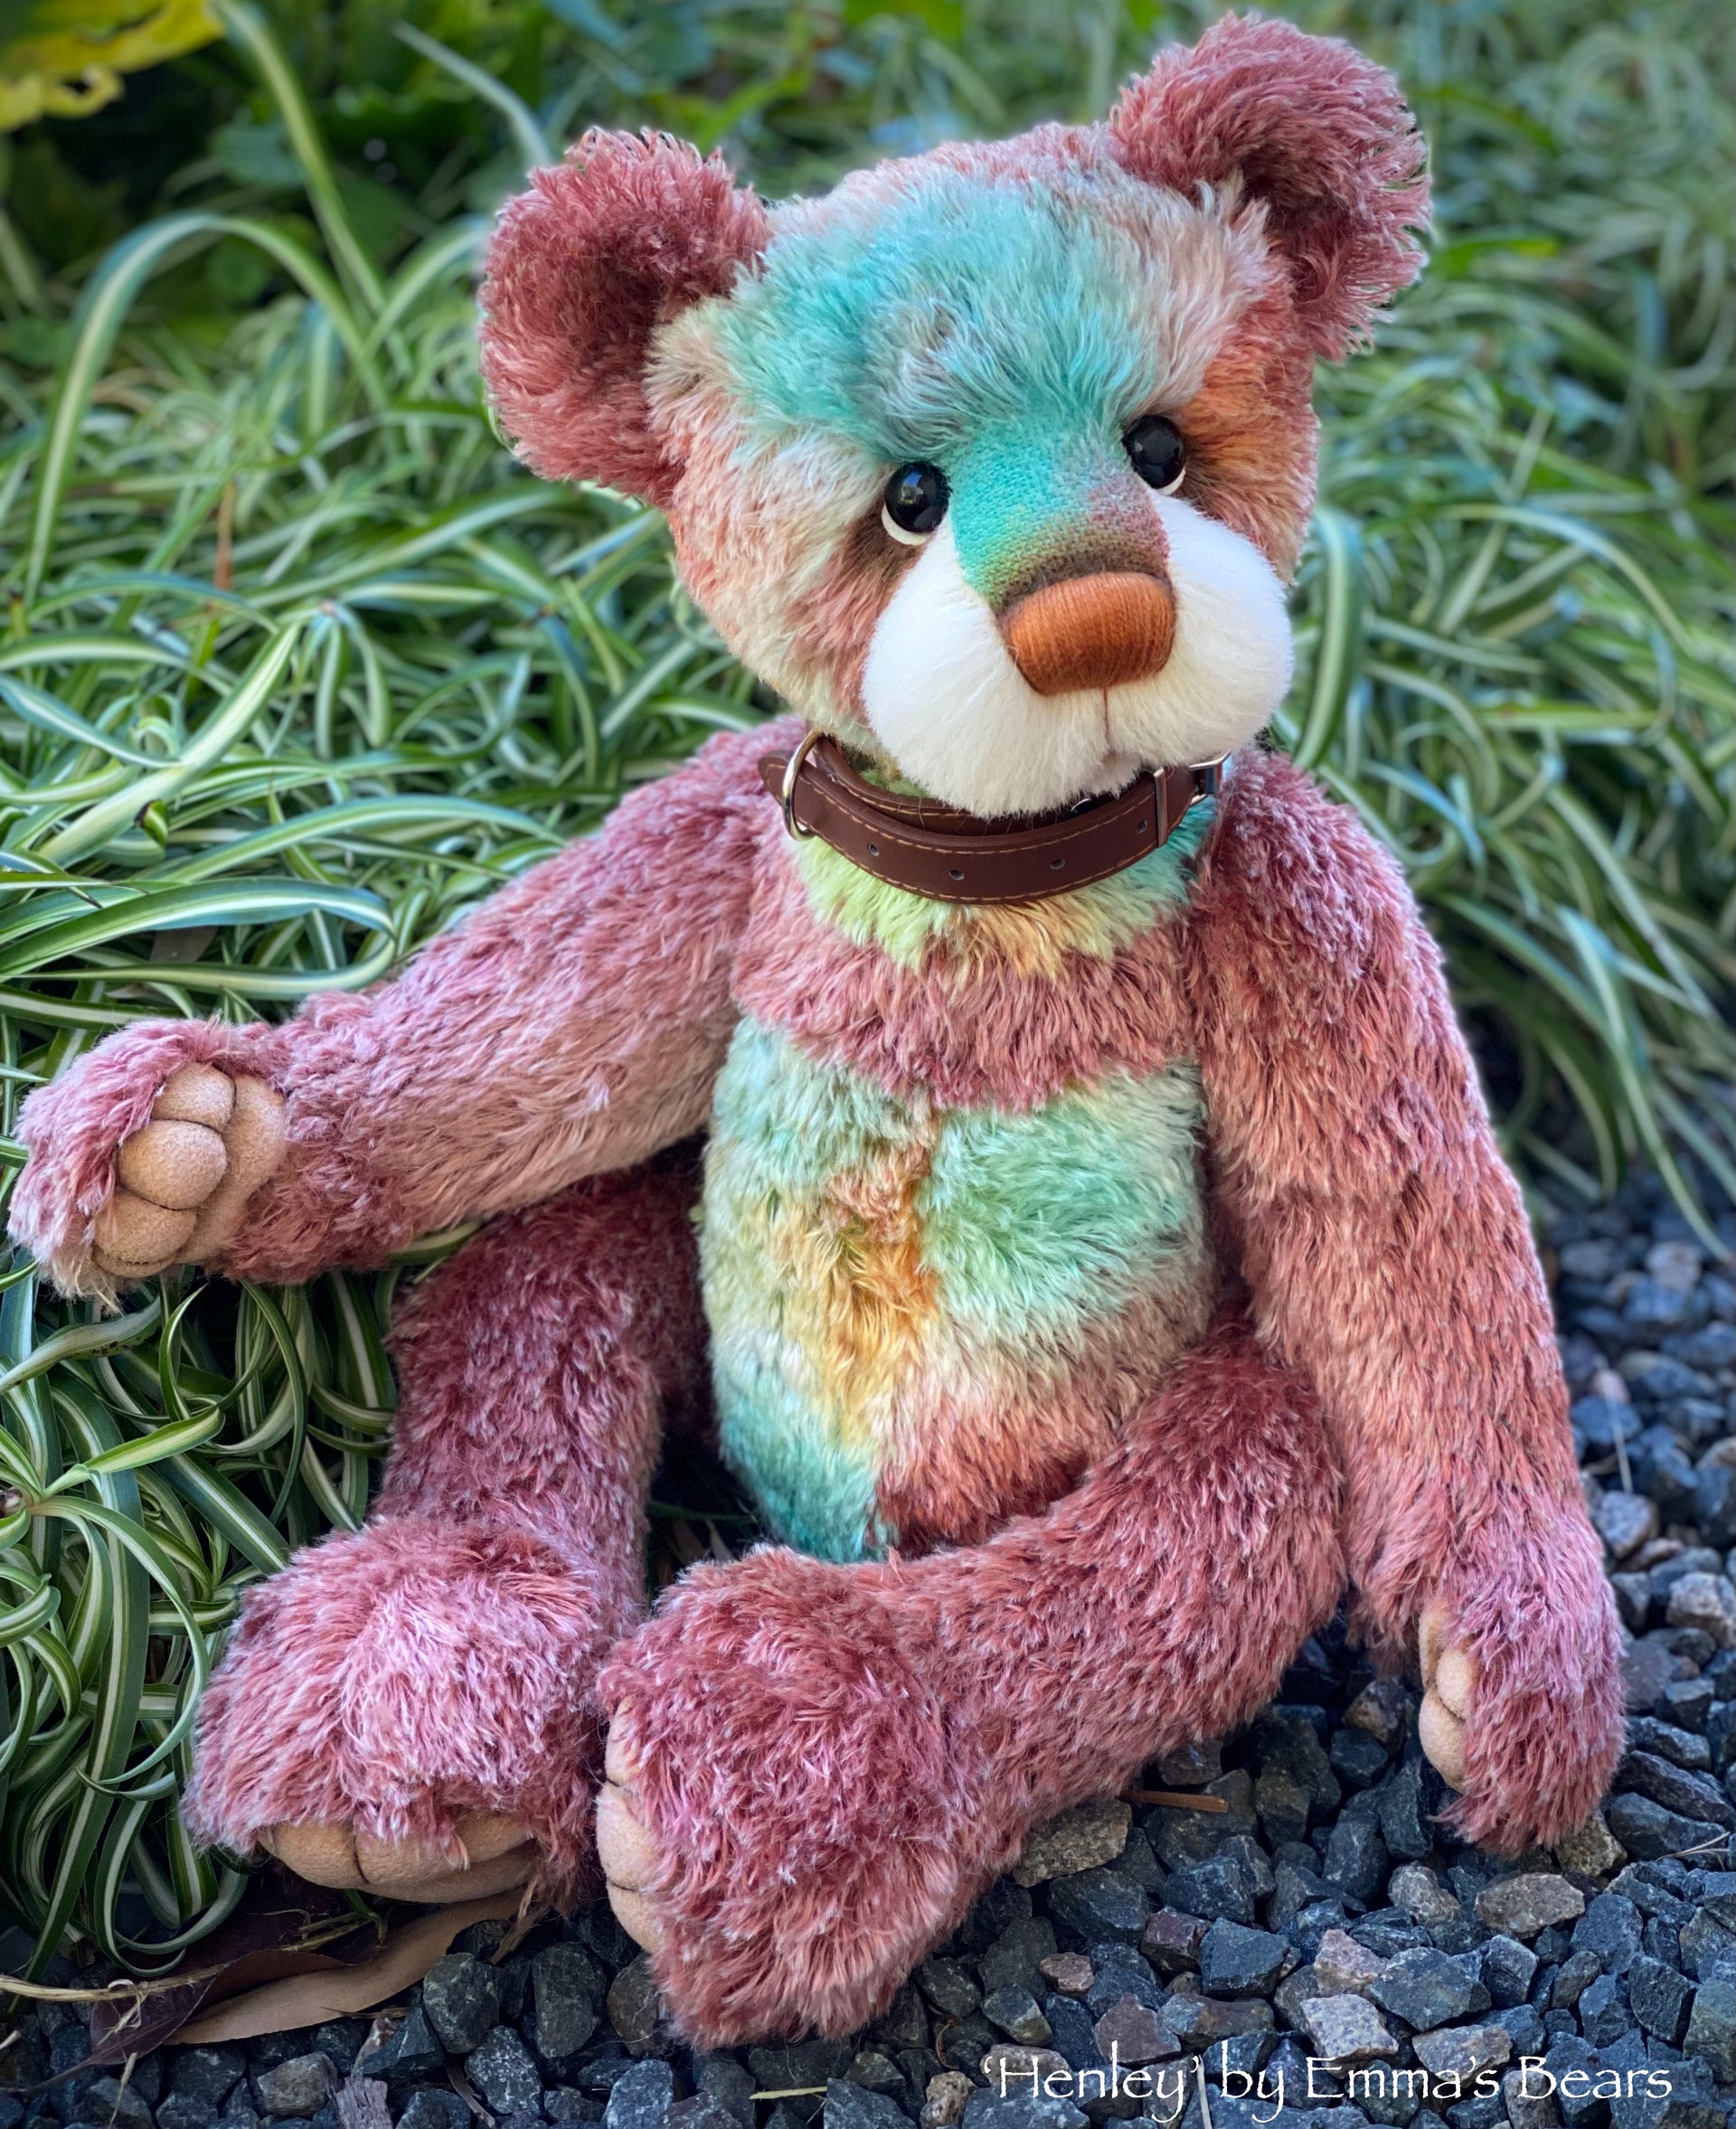 Henley - 21" Hand-Dyed Mohair Artist Bear by Emma's Bears - OOAK